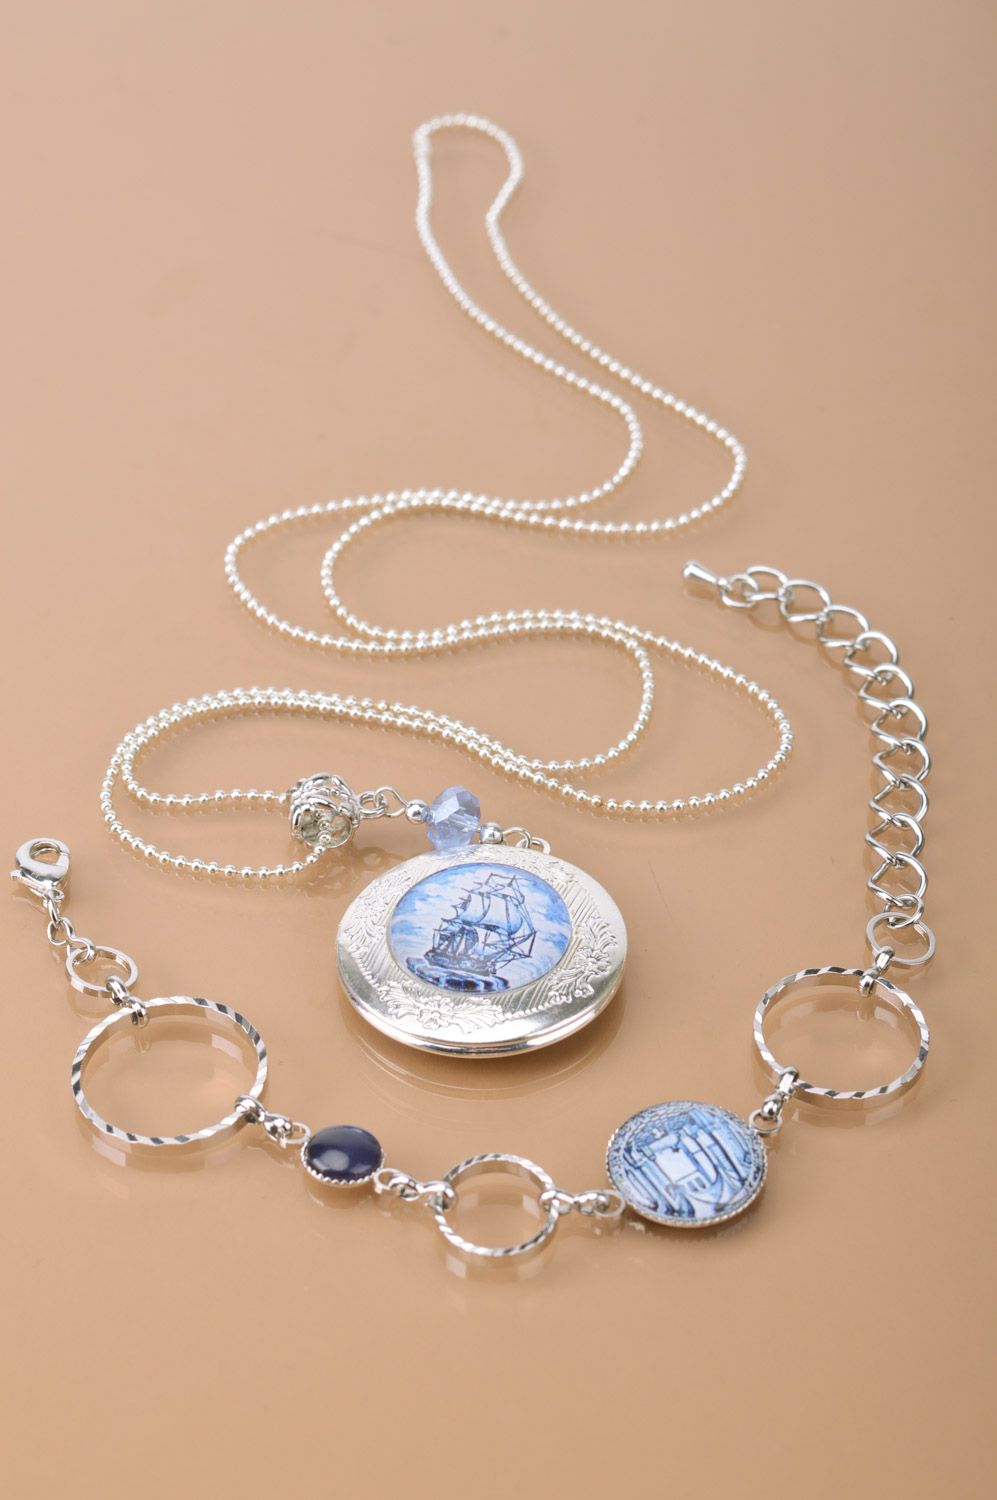 Handmade metal jewelry set 2 items pendant locket on long chain and wrist bracelet photo 2